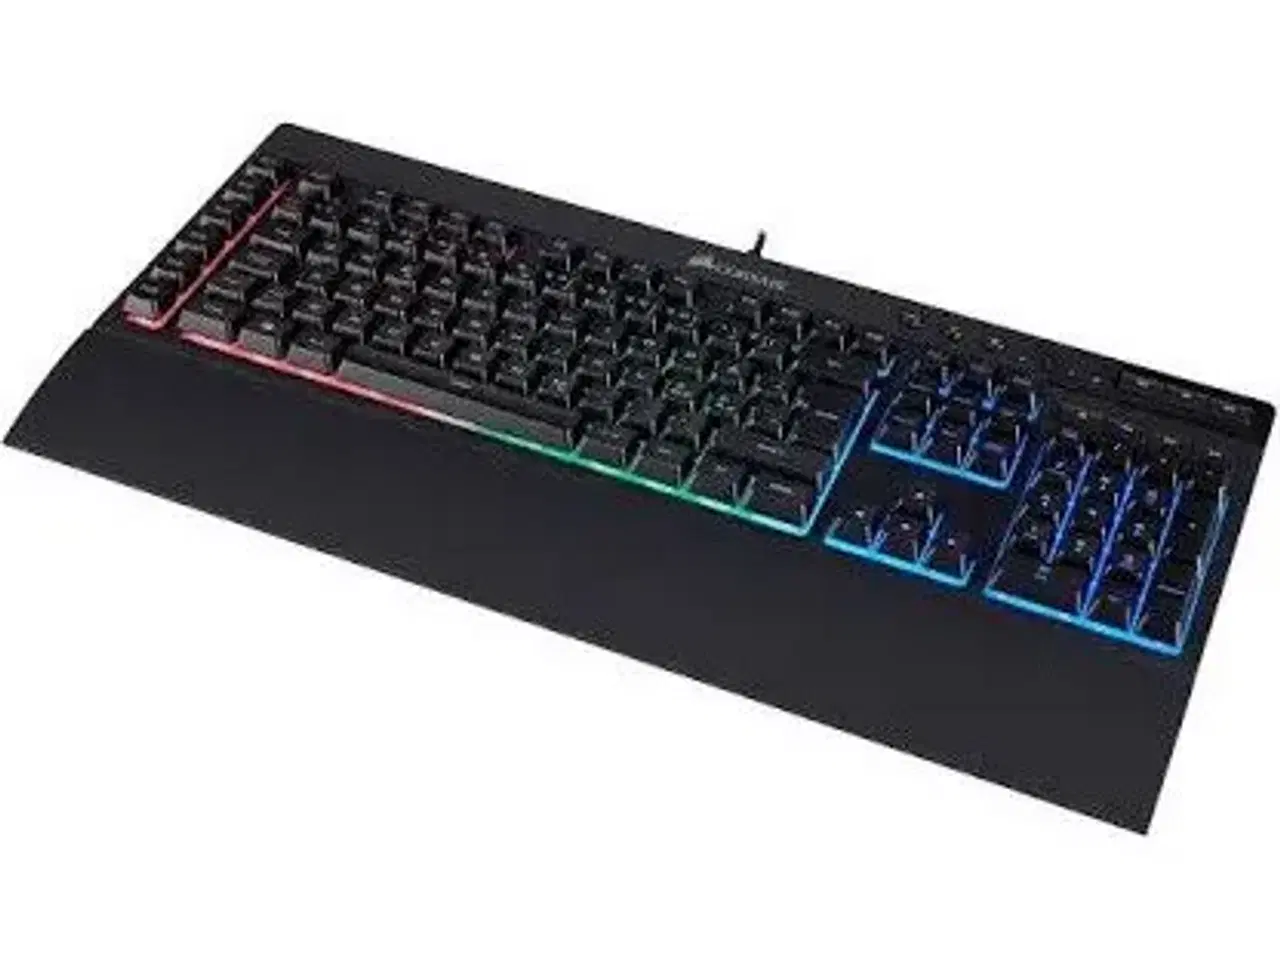 Billede 3 - Corsair K55 RGB gaming keyboard 